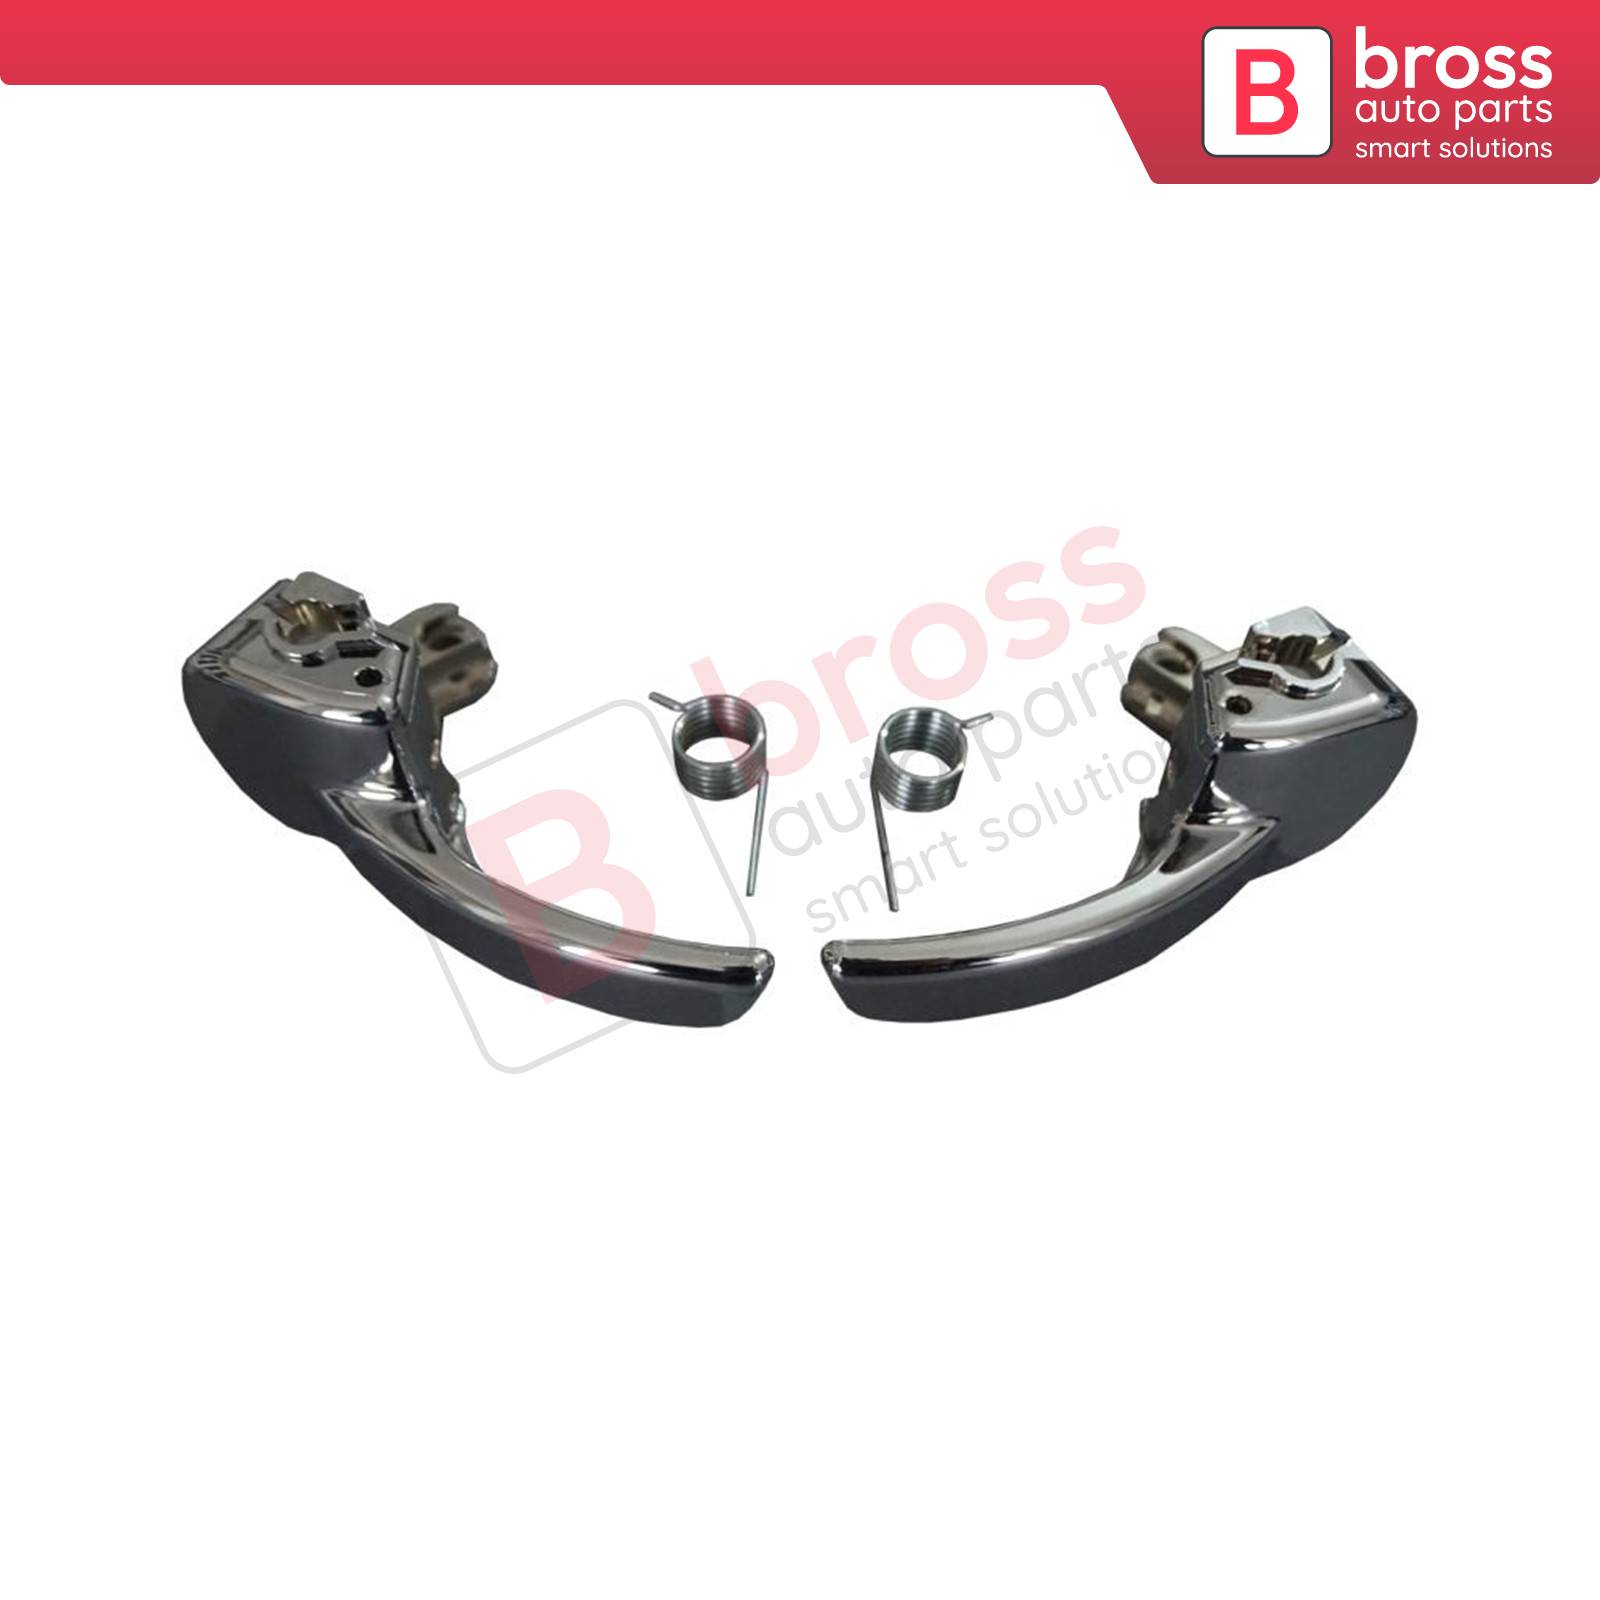 Bross Auto Parts LLC - BDP917 Interior Front or Rear Door Chrome